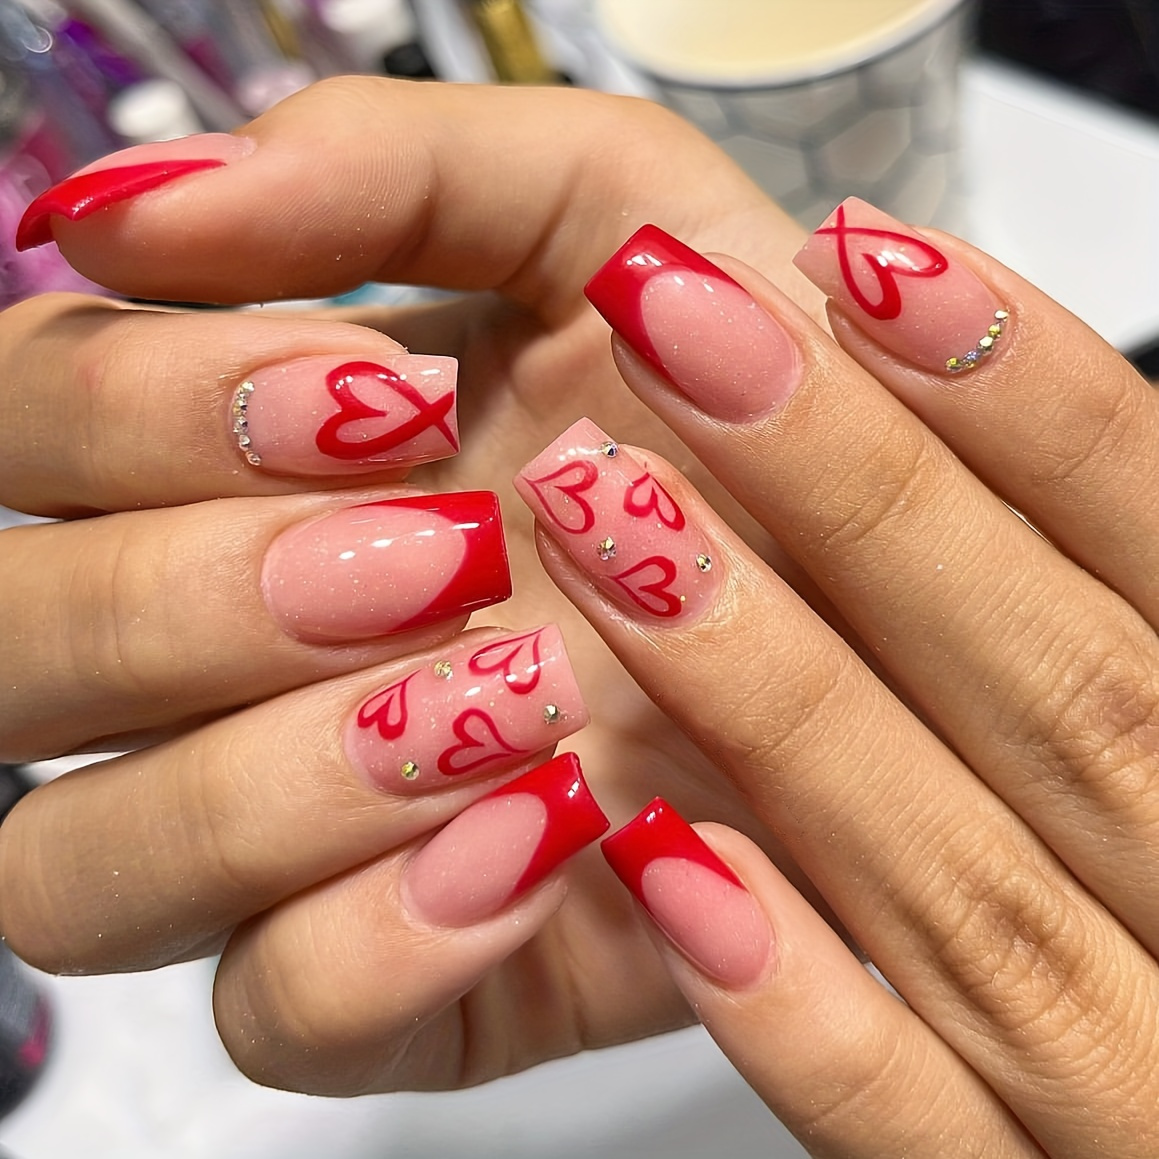 Charleston blush | Nails for kids, Kids nail designs, Color street nails